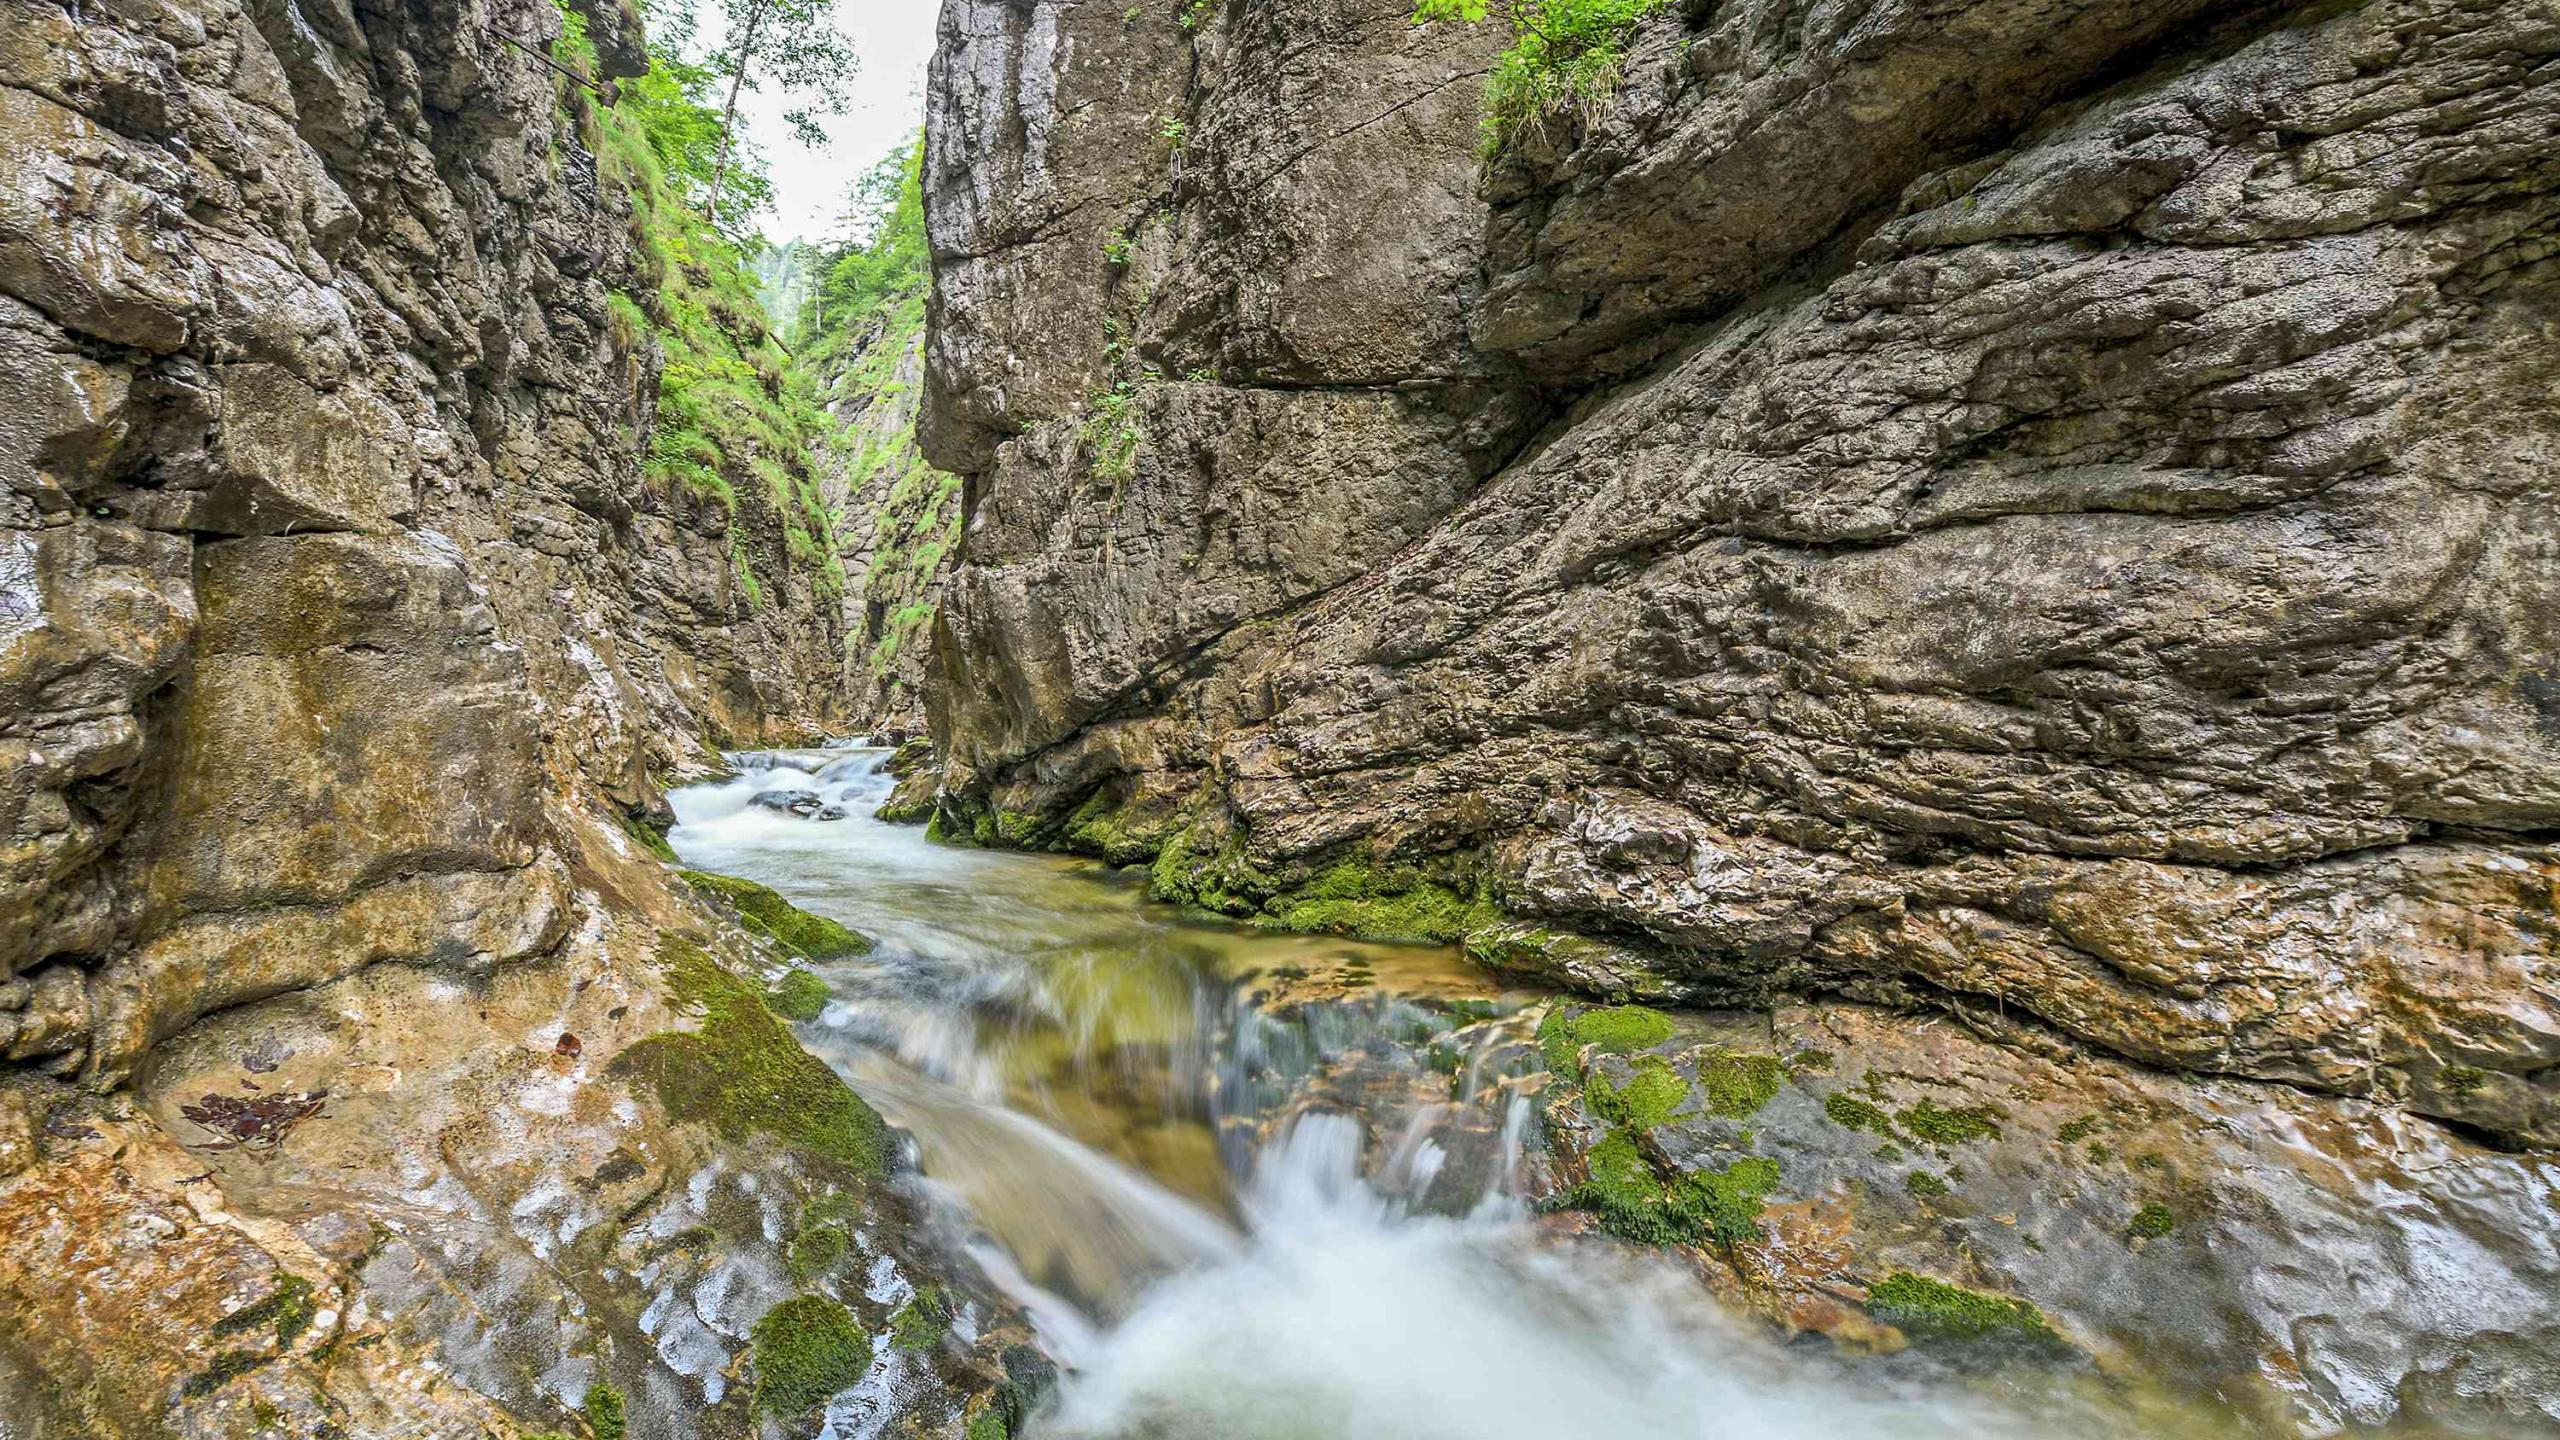 Mountain stream forces its way through a deep, narrow gorge